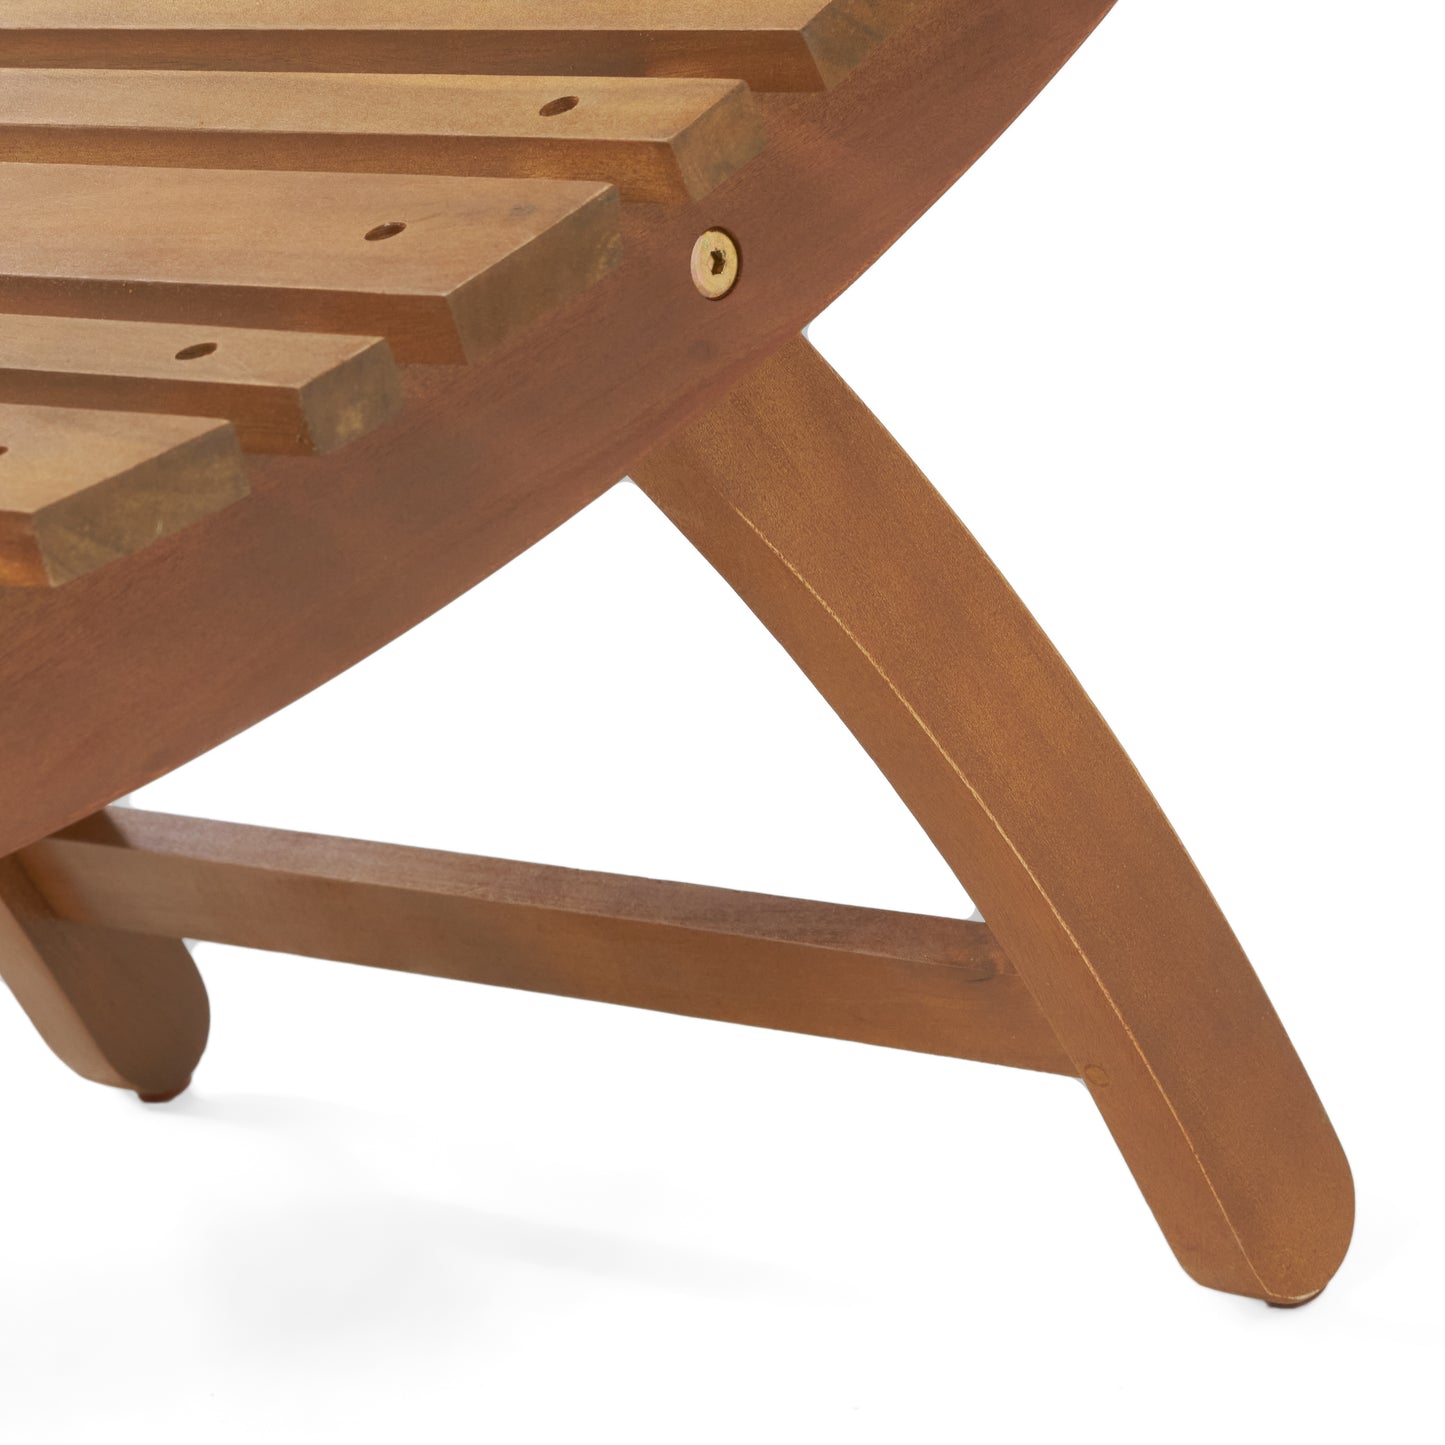 Lisbon Outdoor Wood Folding & Portable Chaise Lounge